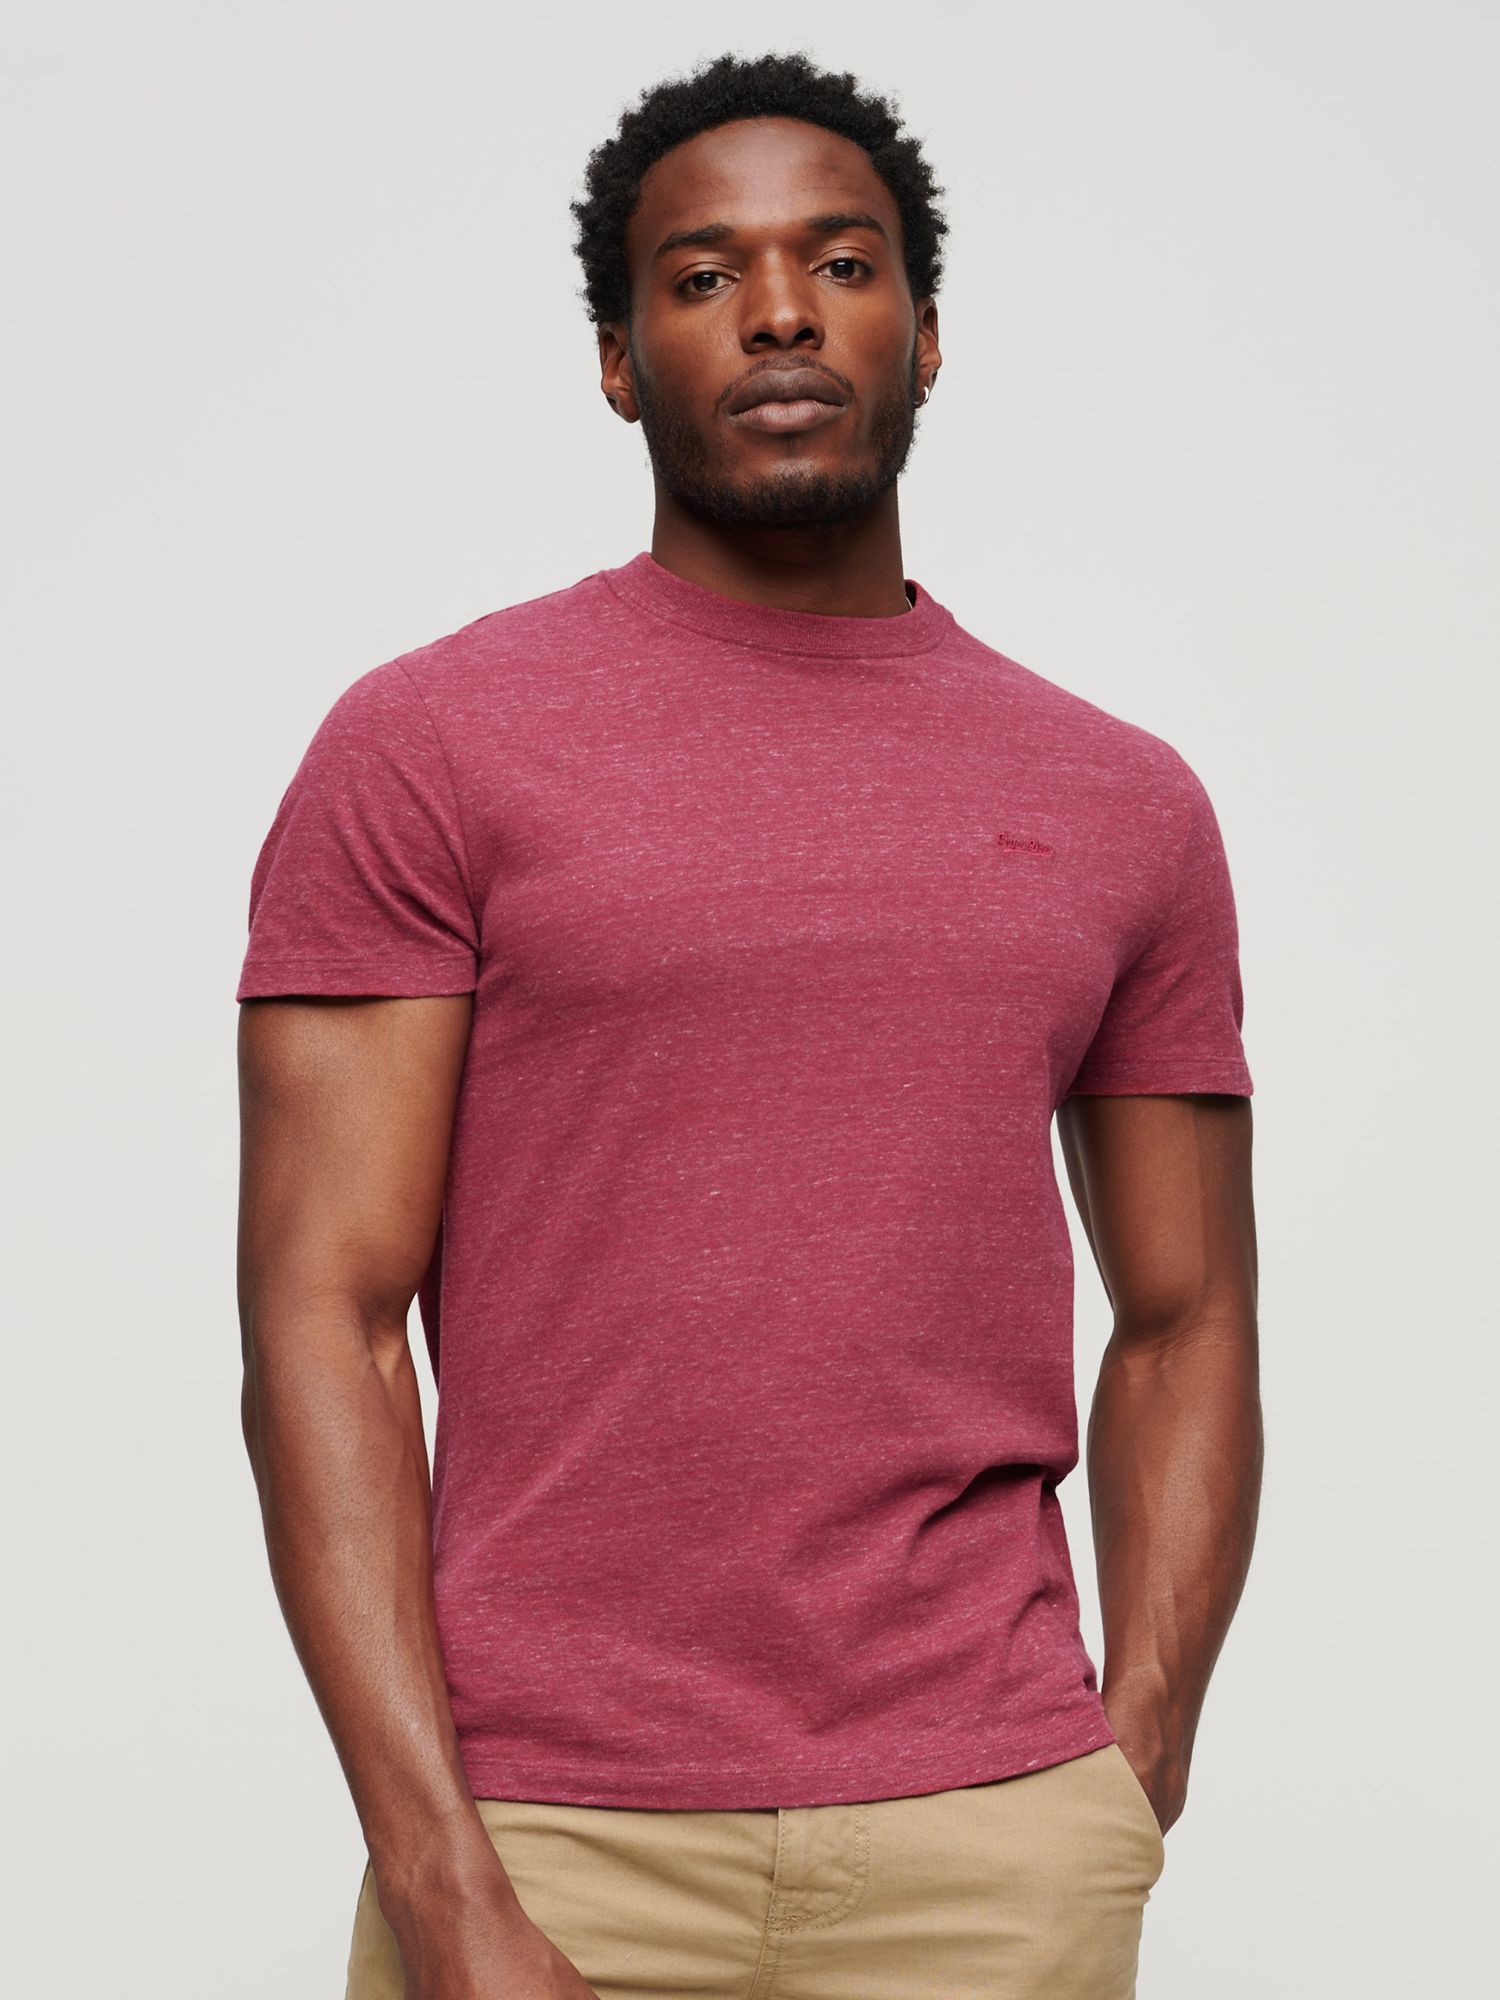 Men's Organic Cotton Essential Logo T-Shirt in Pale Pink Marl